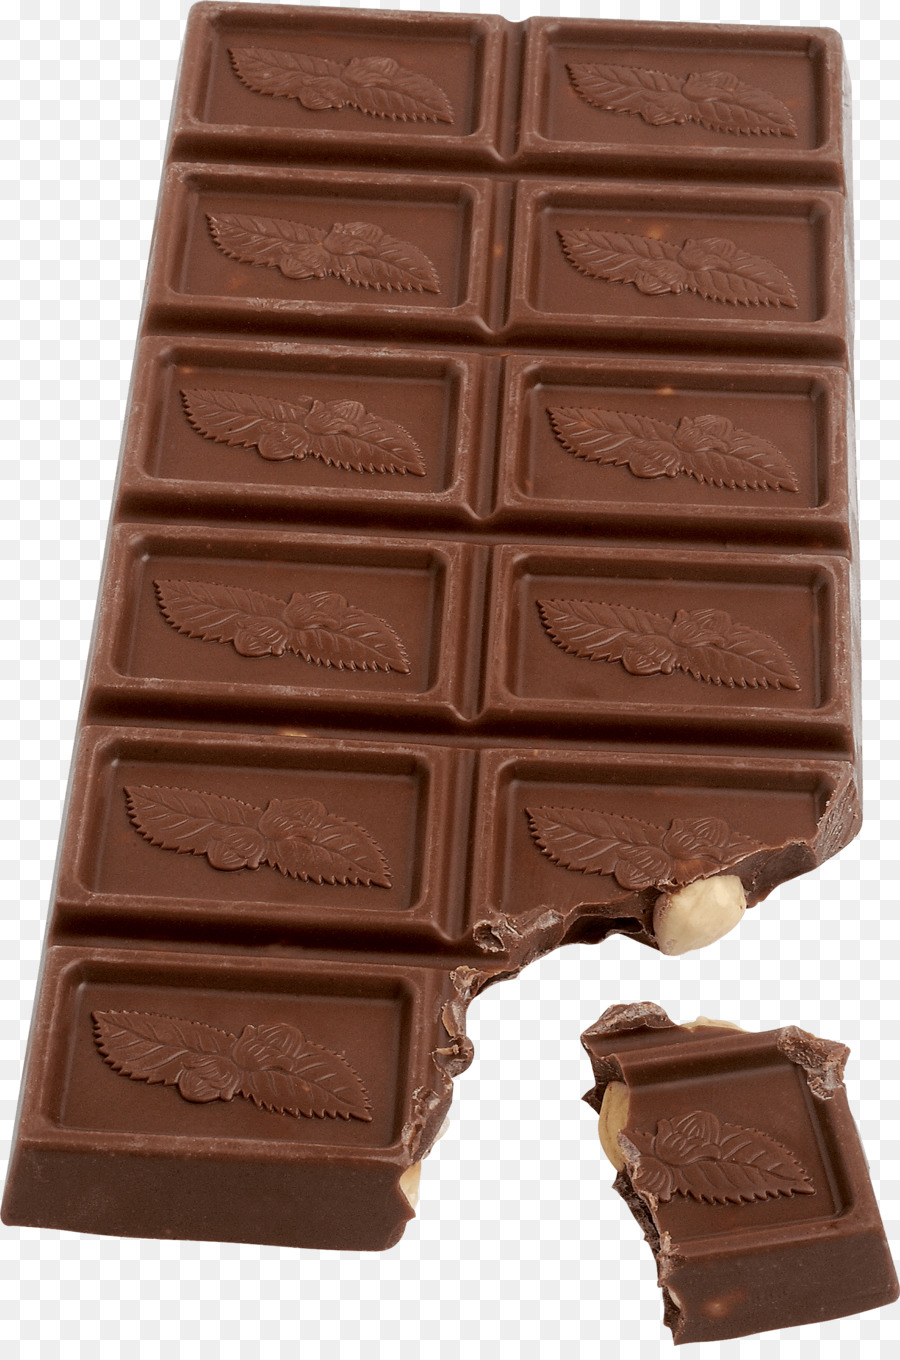 Chocolate bar Chocolate cake Kinder Chocolate Hershey bar White chocolate - chocolate png download - 1860*2781 - Free Transparent Chocolate Bar png Download.